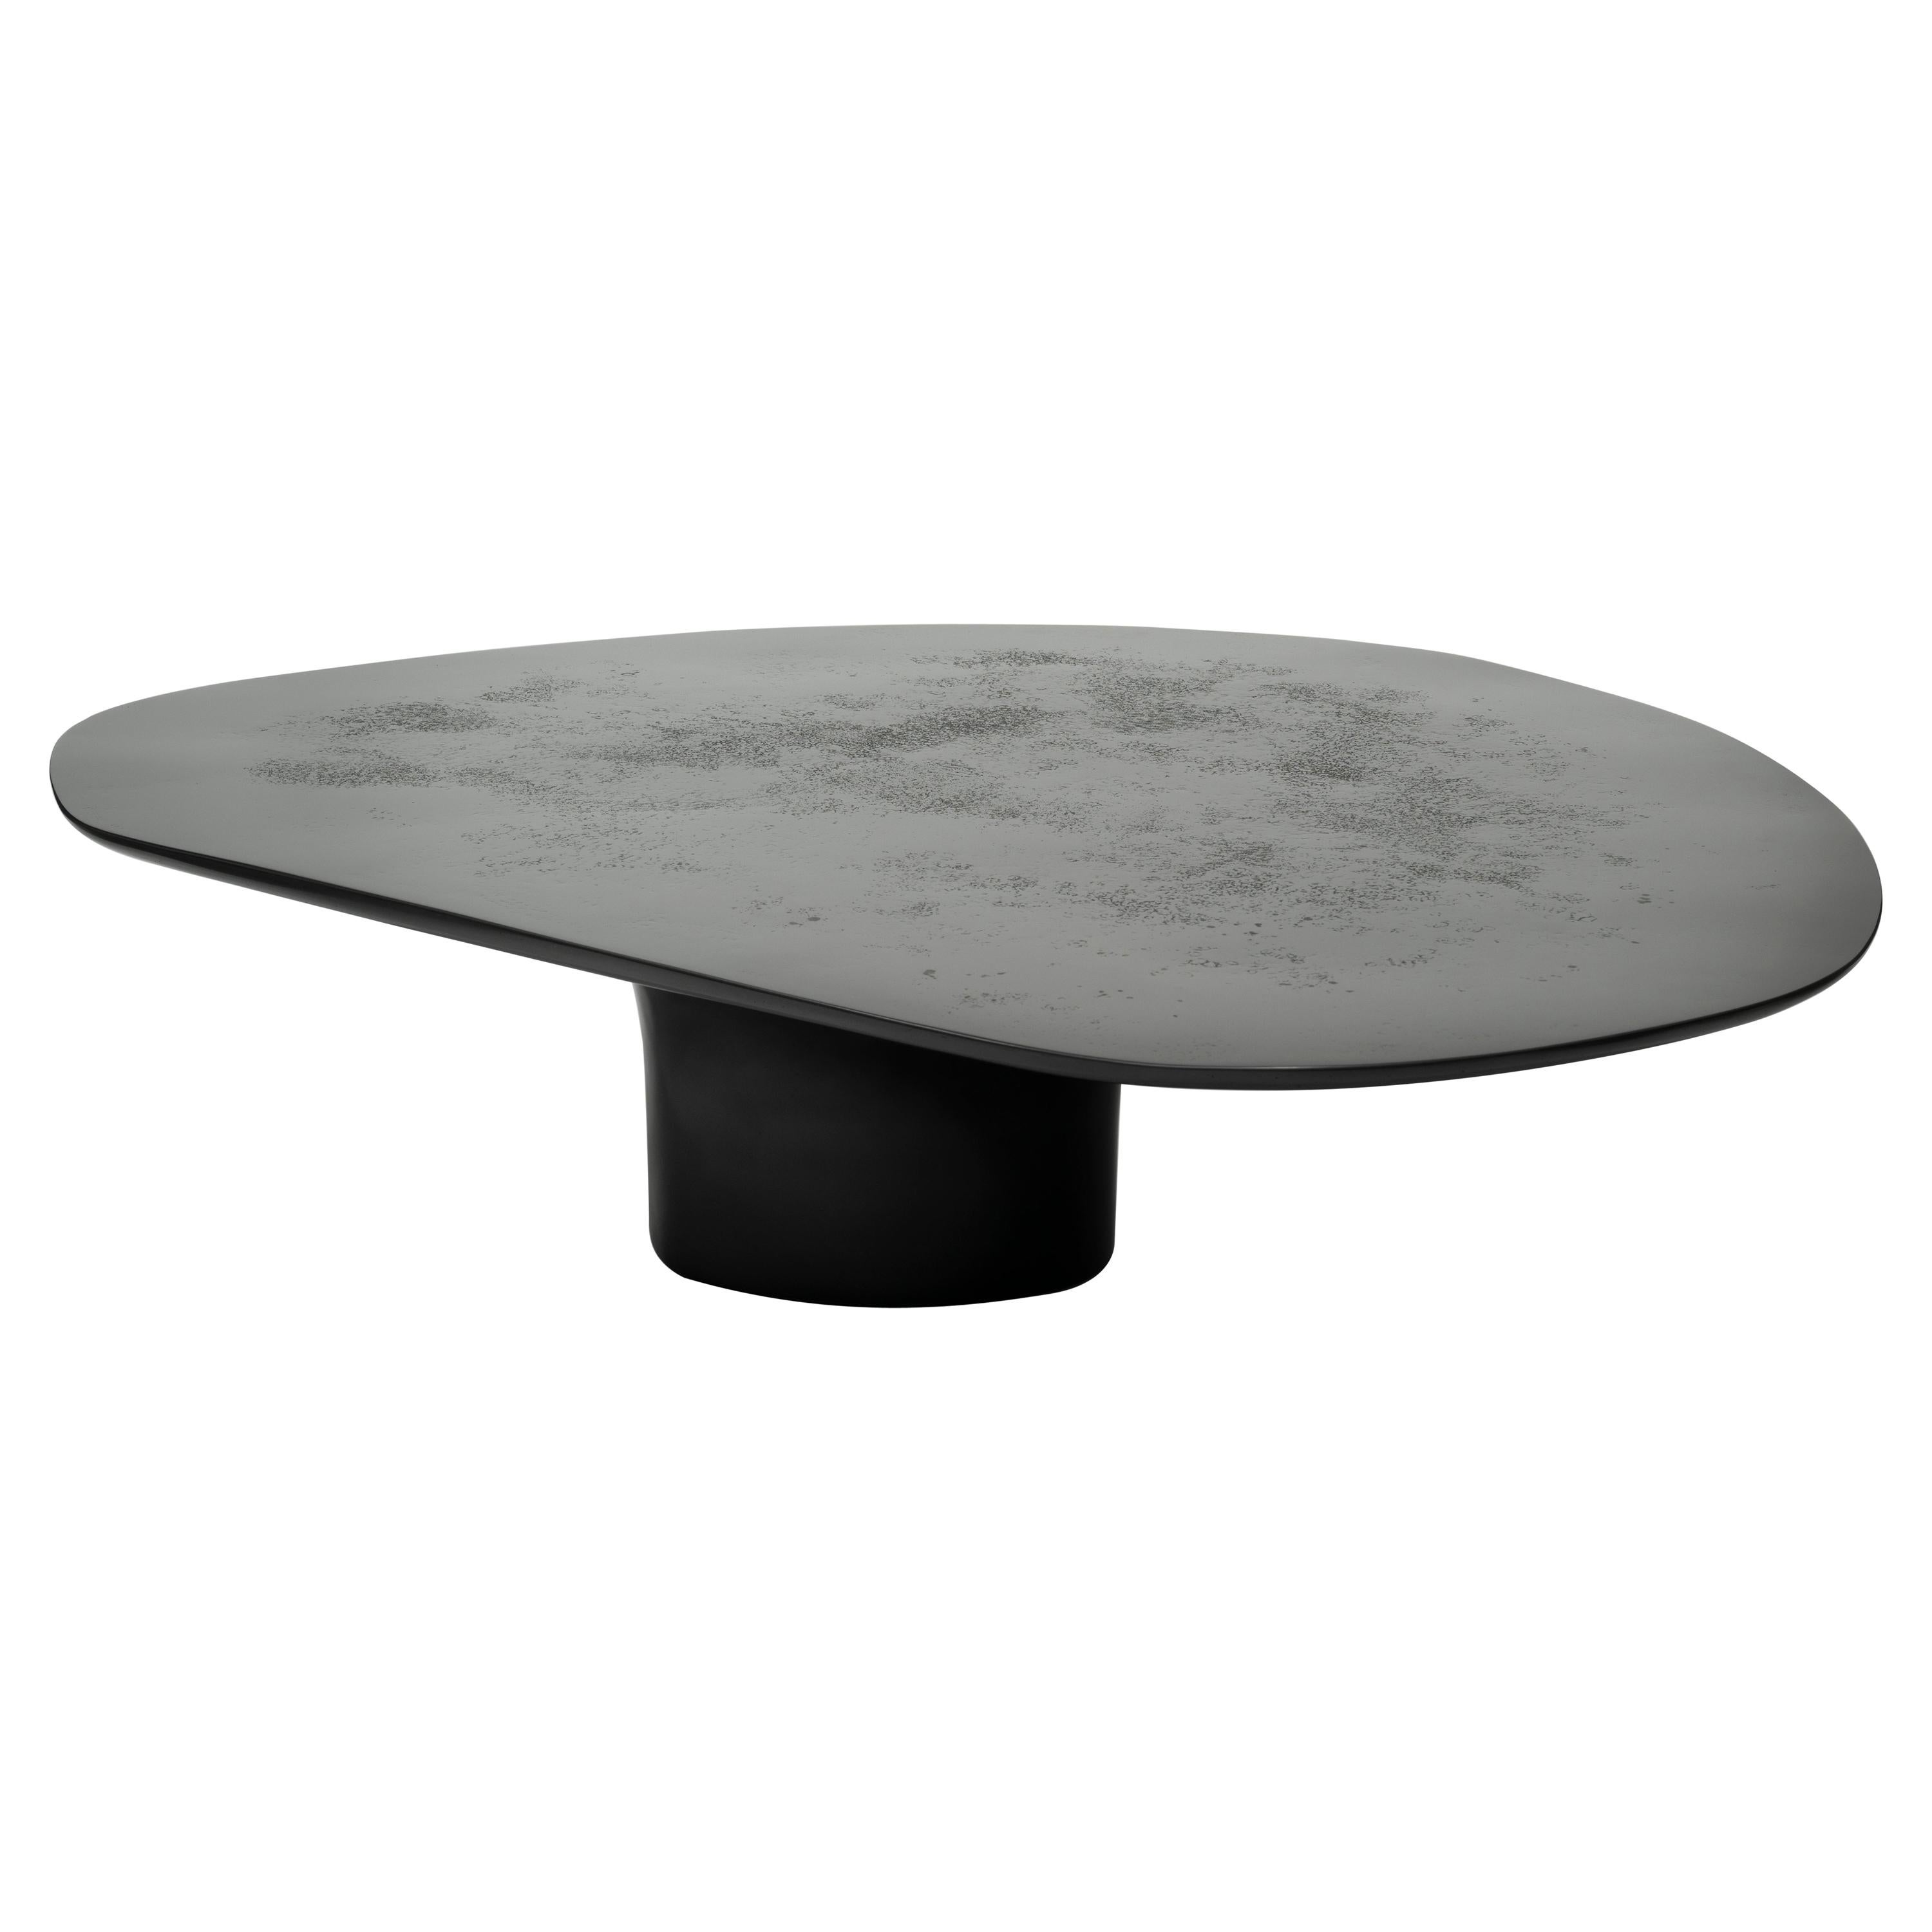 NR Black Smooth, 21st Century Contemporary Circular Black Coffee Table